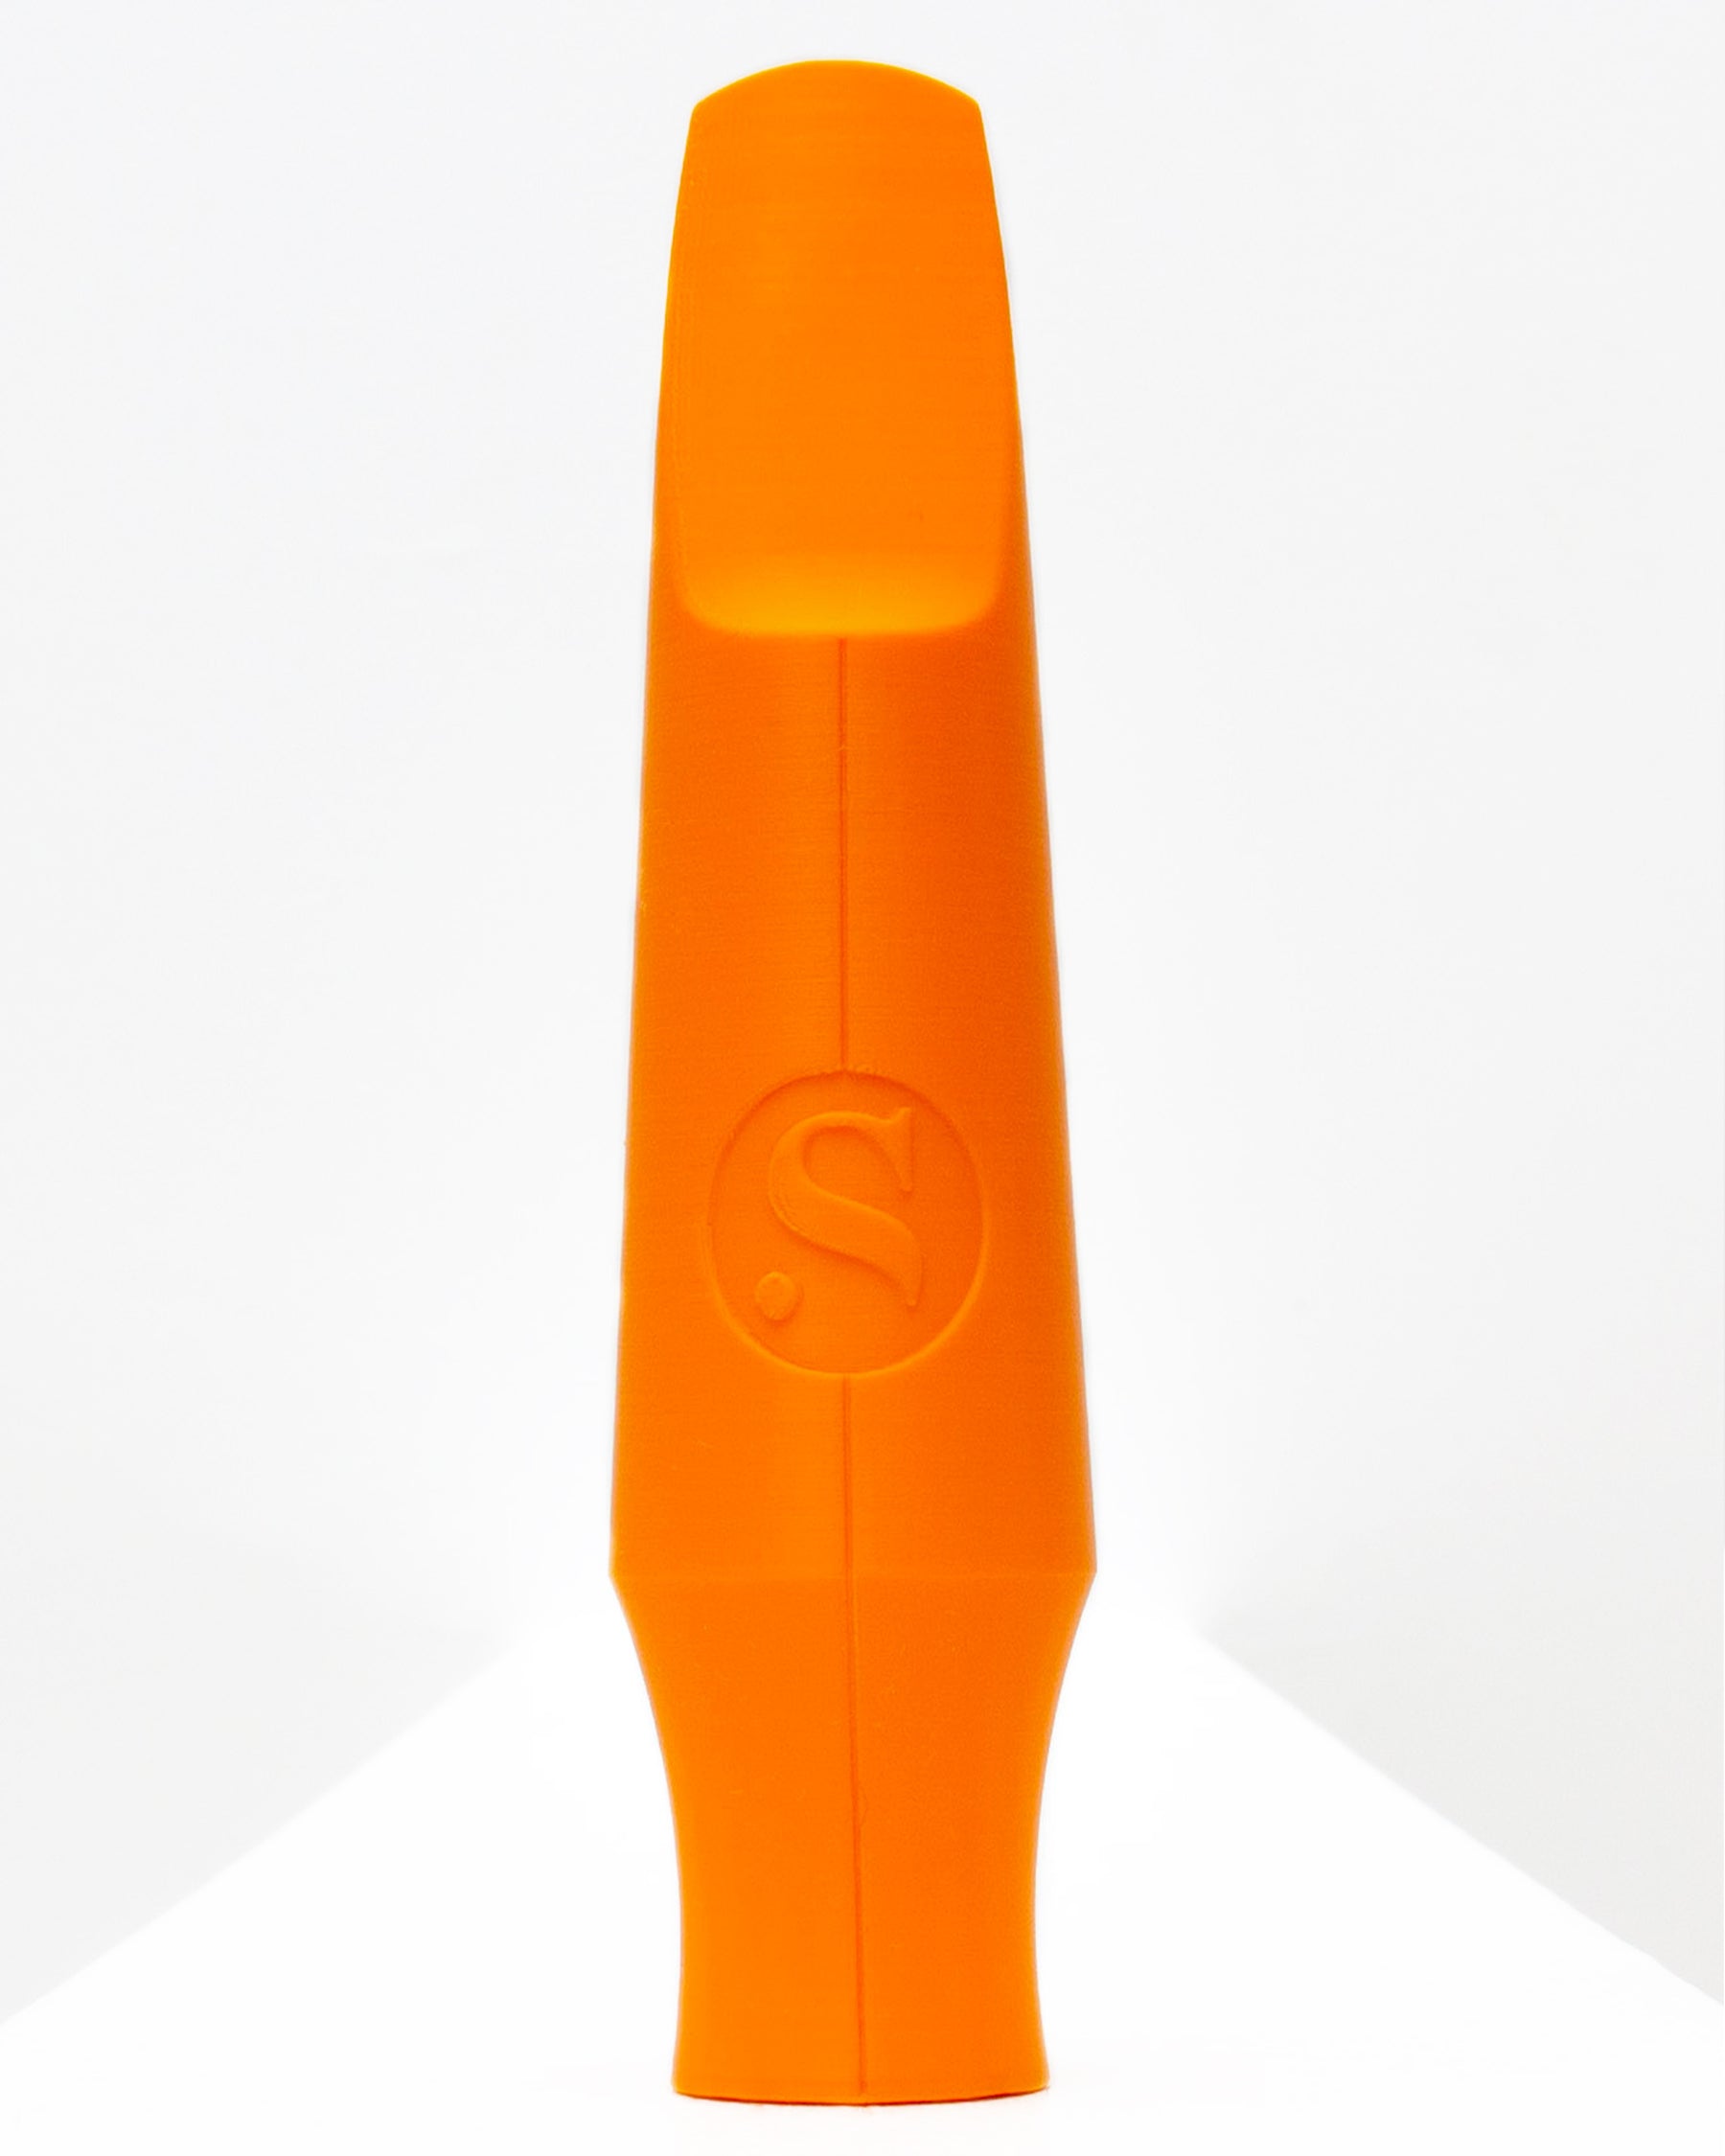 Baritone Signature Saxophone mouthpiece - Scott Paddock by Syos - 9 / Lava Orange